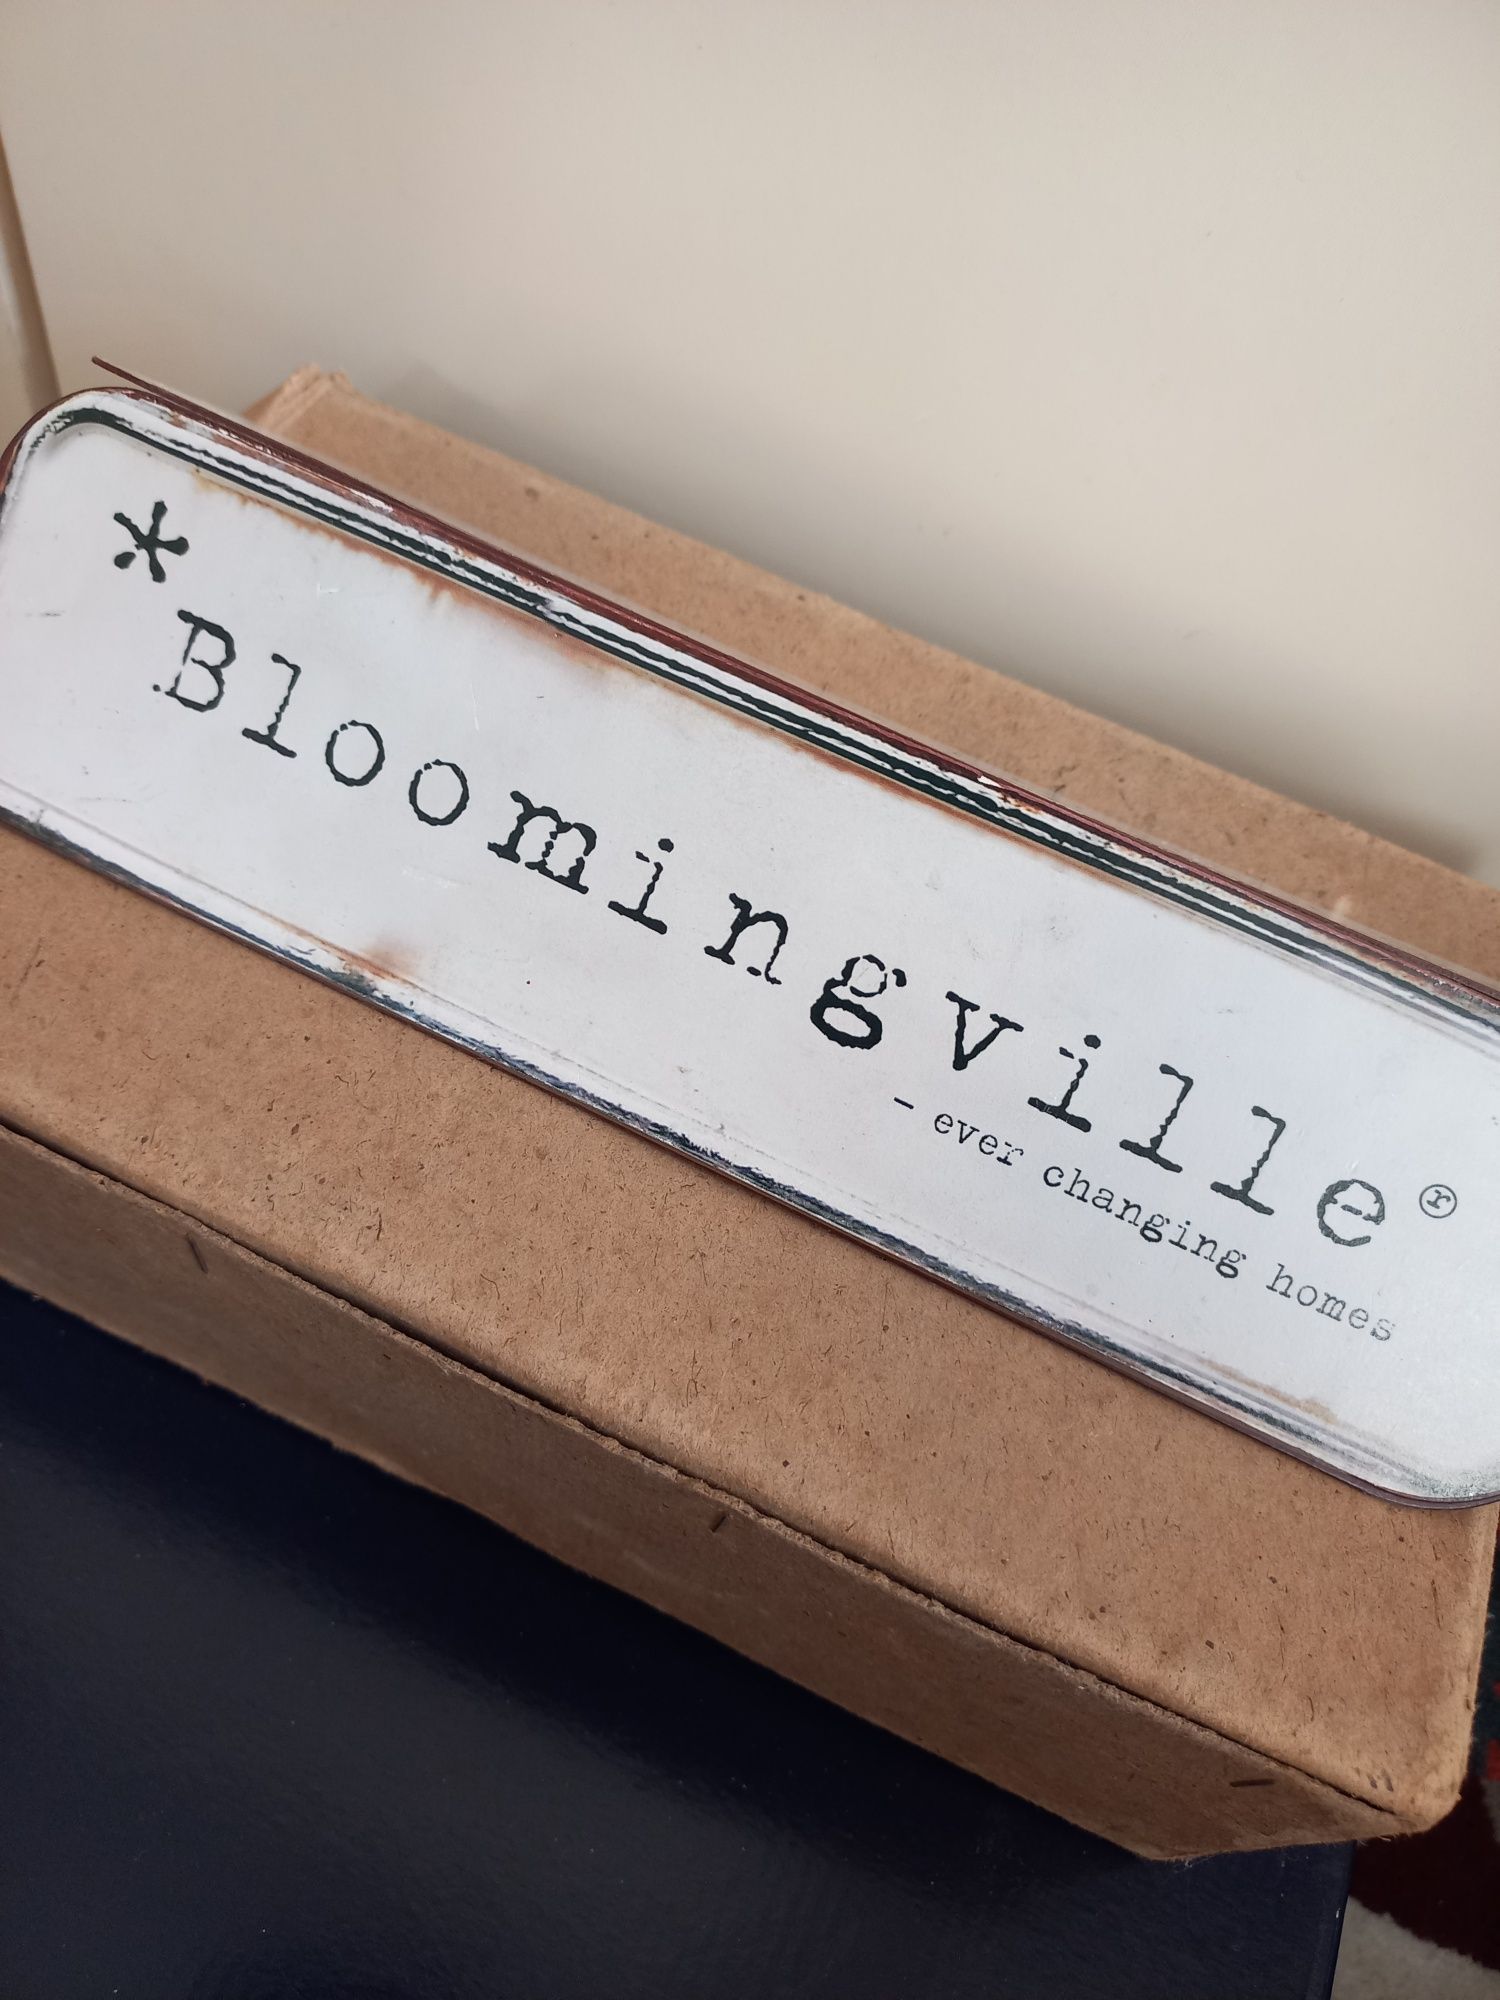 Szyld tabliczka metalowa Bloomingville